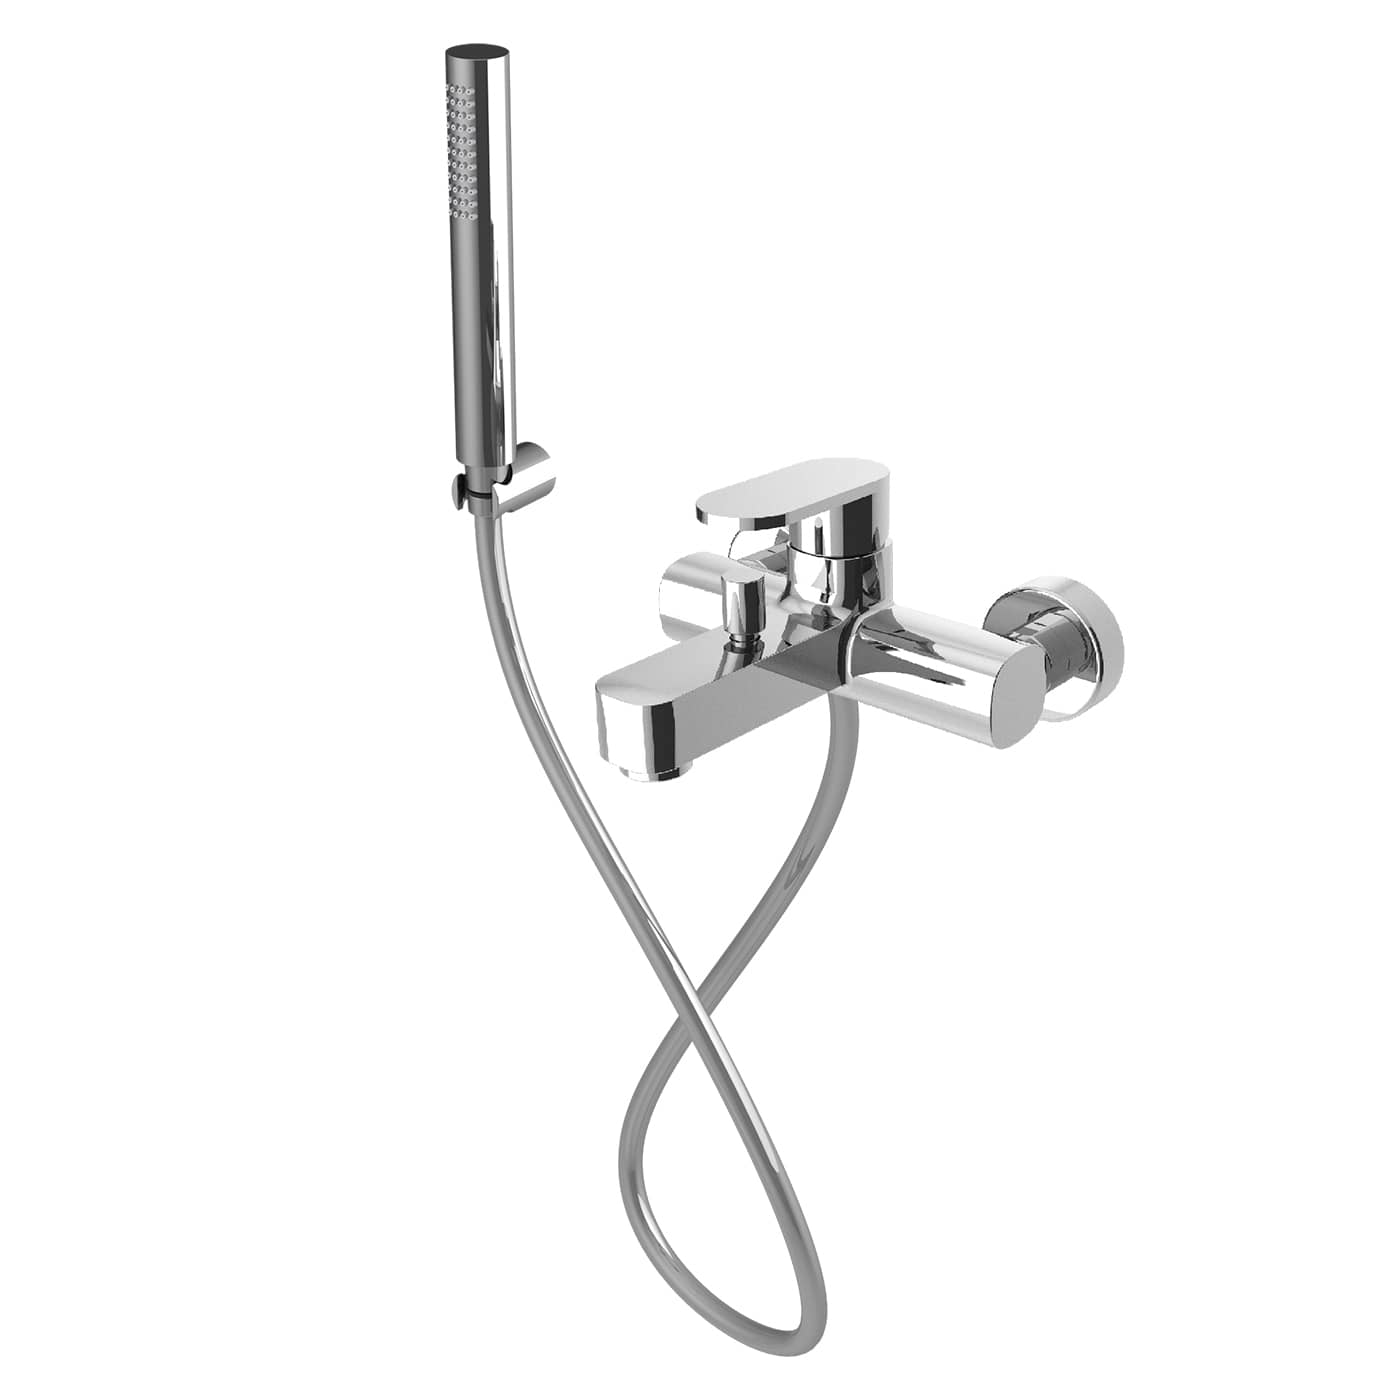 VIVE010RO - Monocomando esterno per vasca con kit doccia